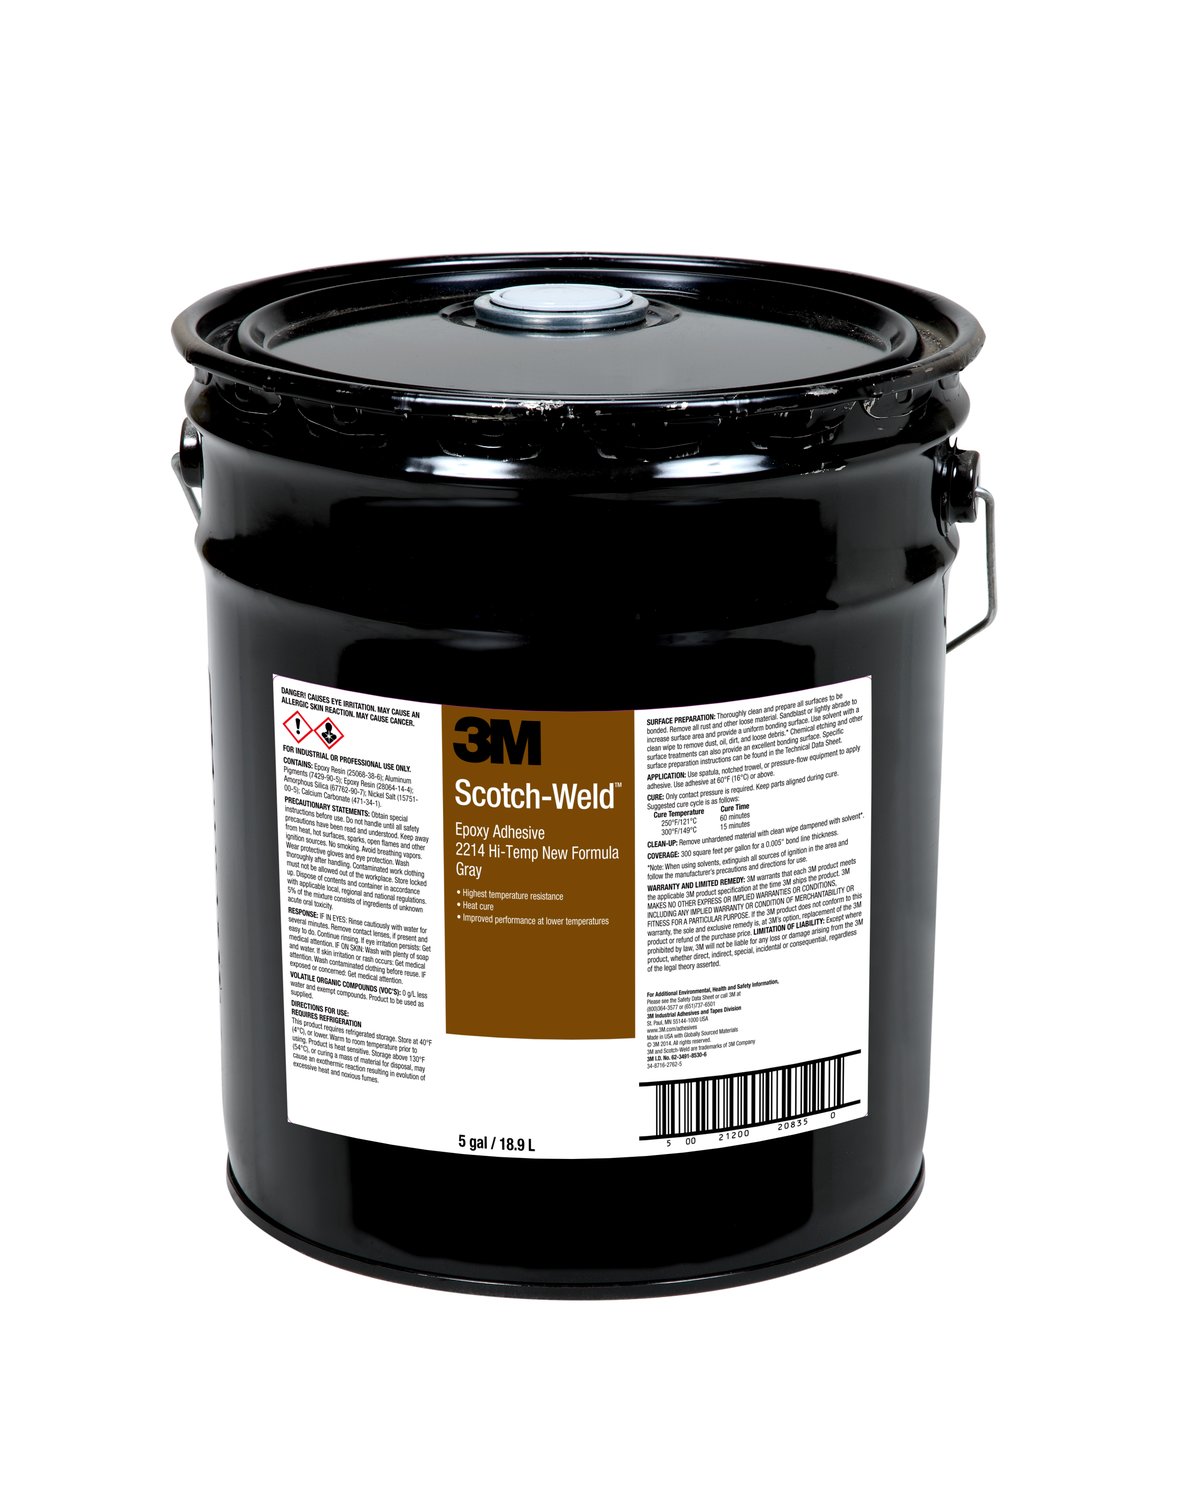 7010330200 - 3M Scotch-Weld Epoxy Adhesive 2214, Hi-Temp New Formula, Gray, 5
Gallon (Pail), Drum